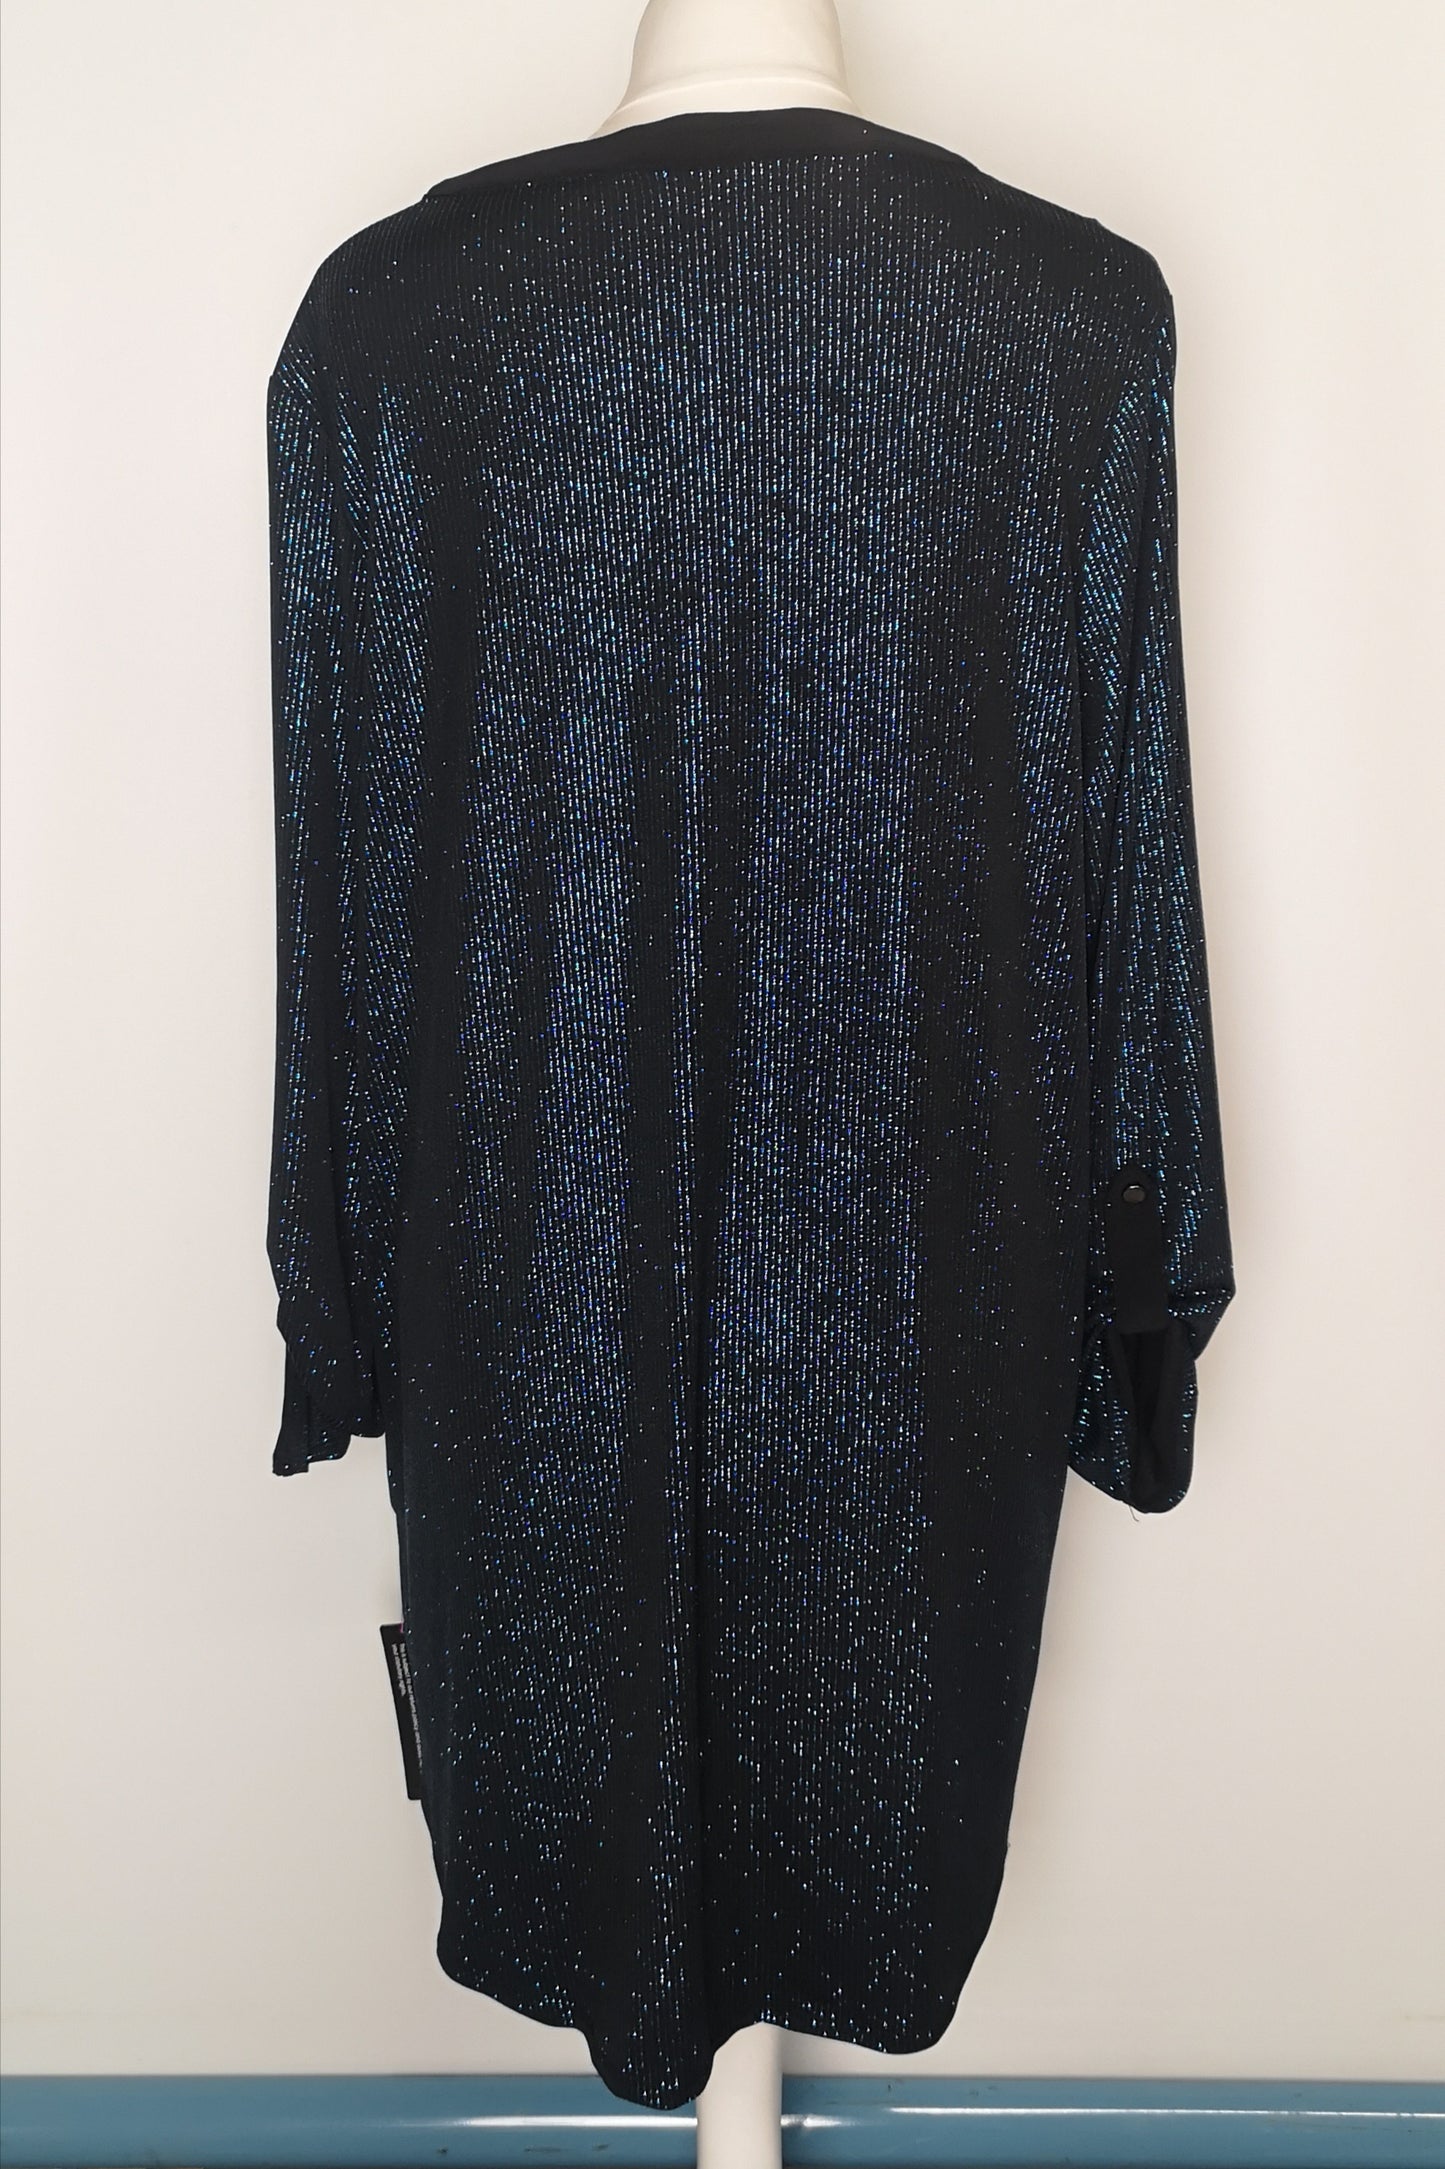 BNWT Roman Curve Black & Blue Glitter Stripe Dress Size 18